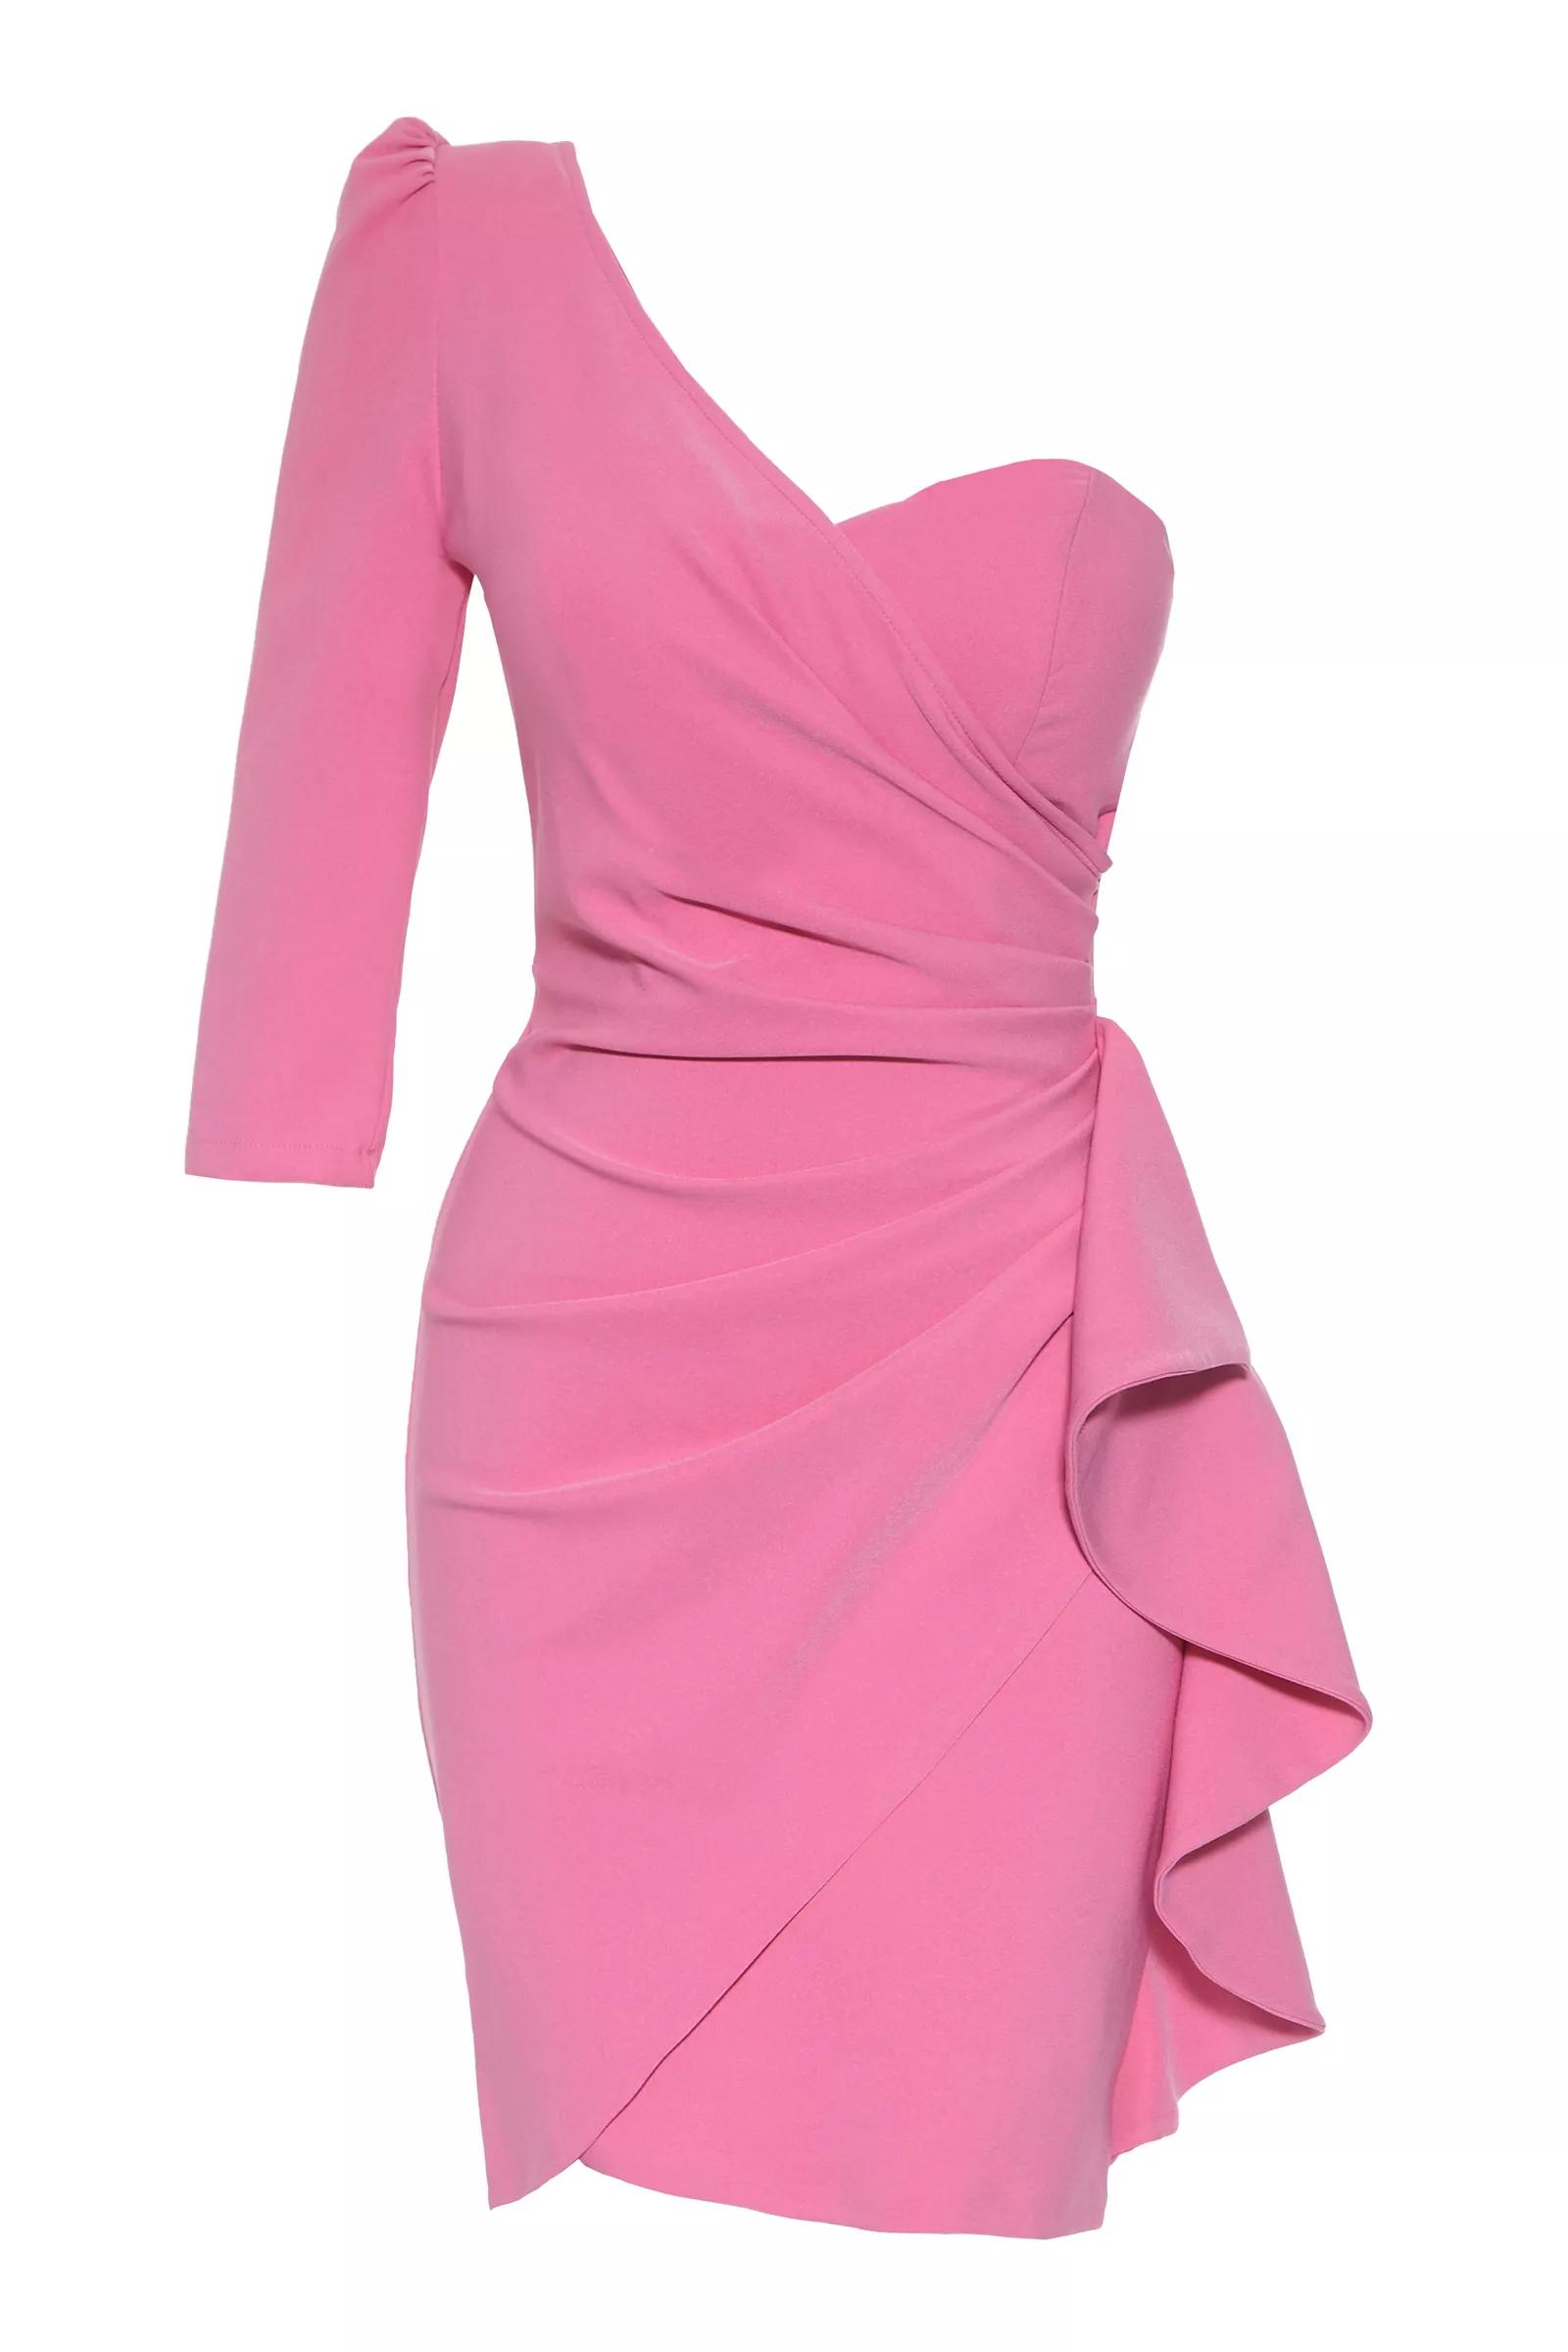 Pink crepe one arm mini dress